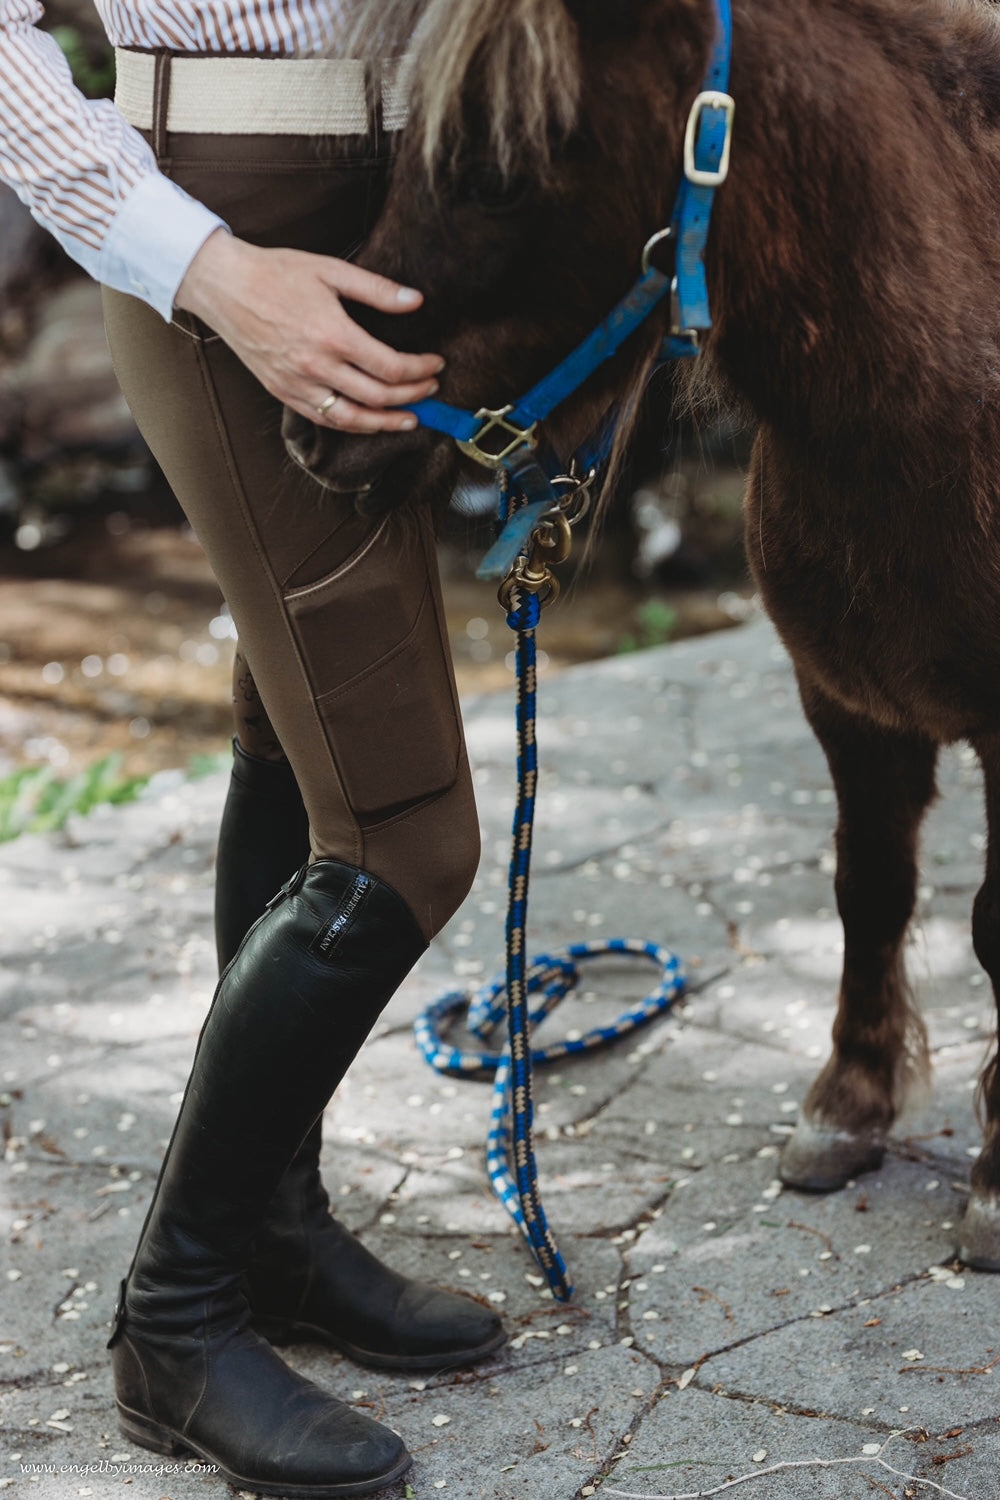 Can you wear leggings horseback riding?